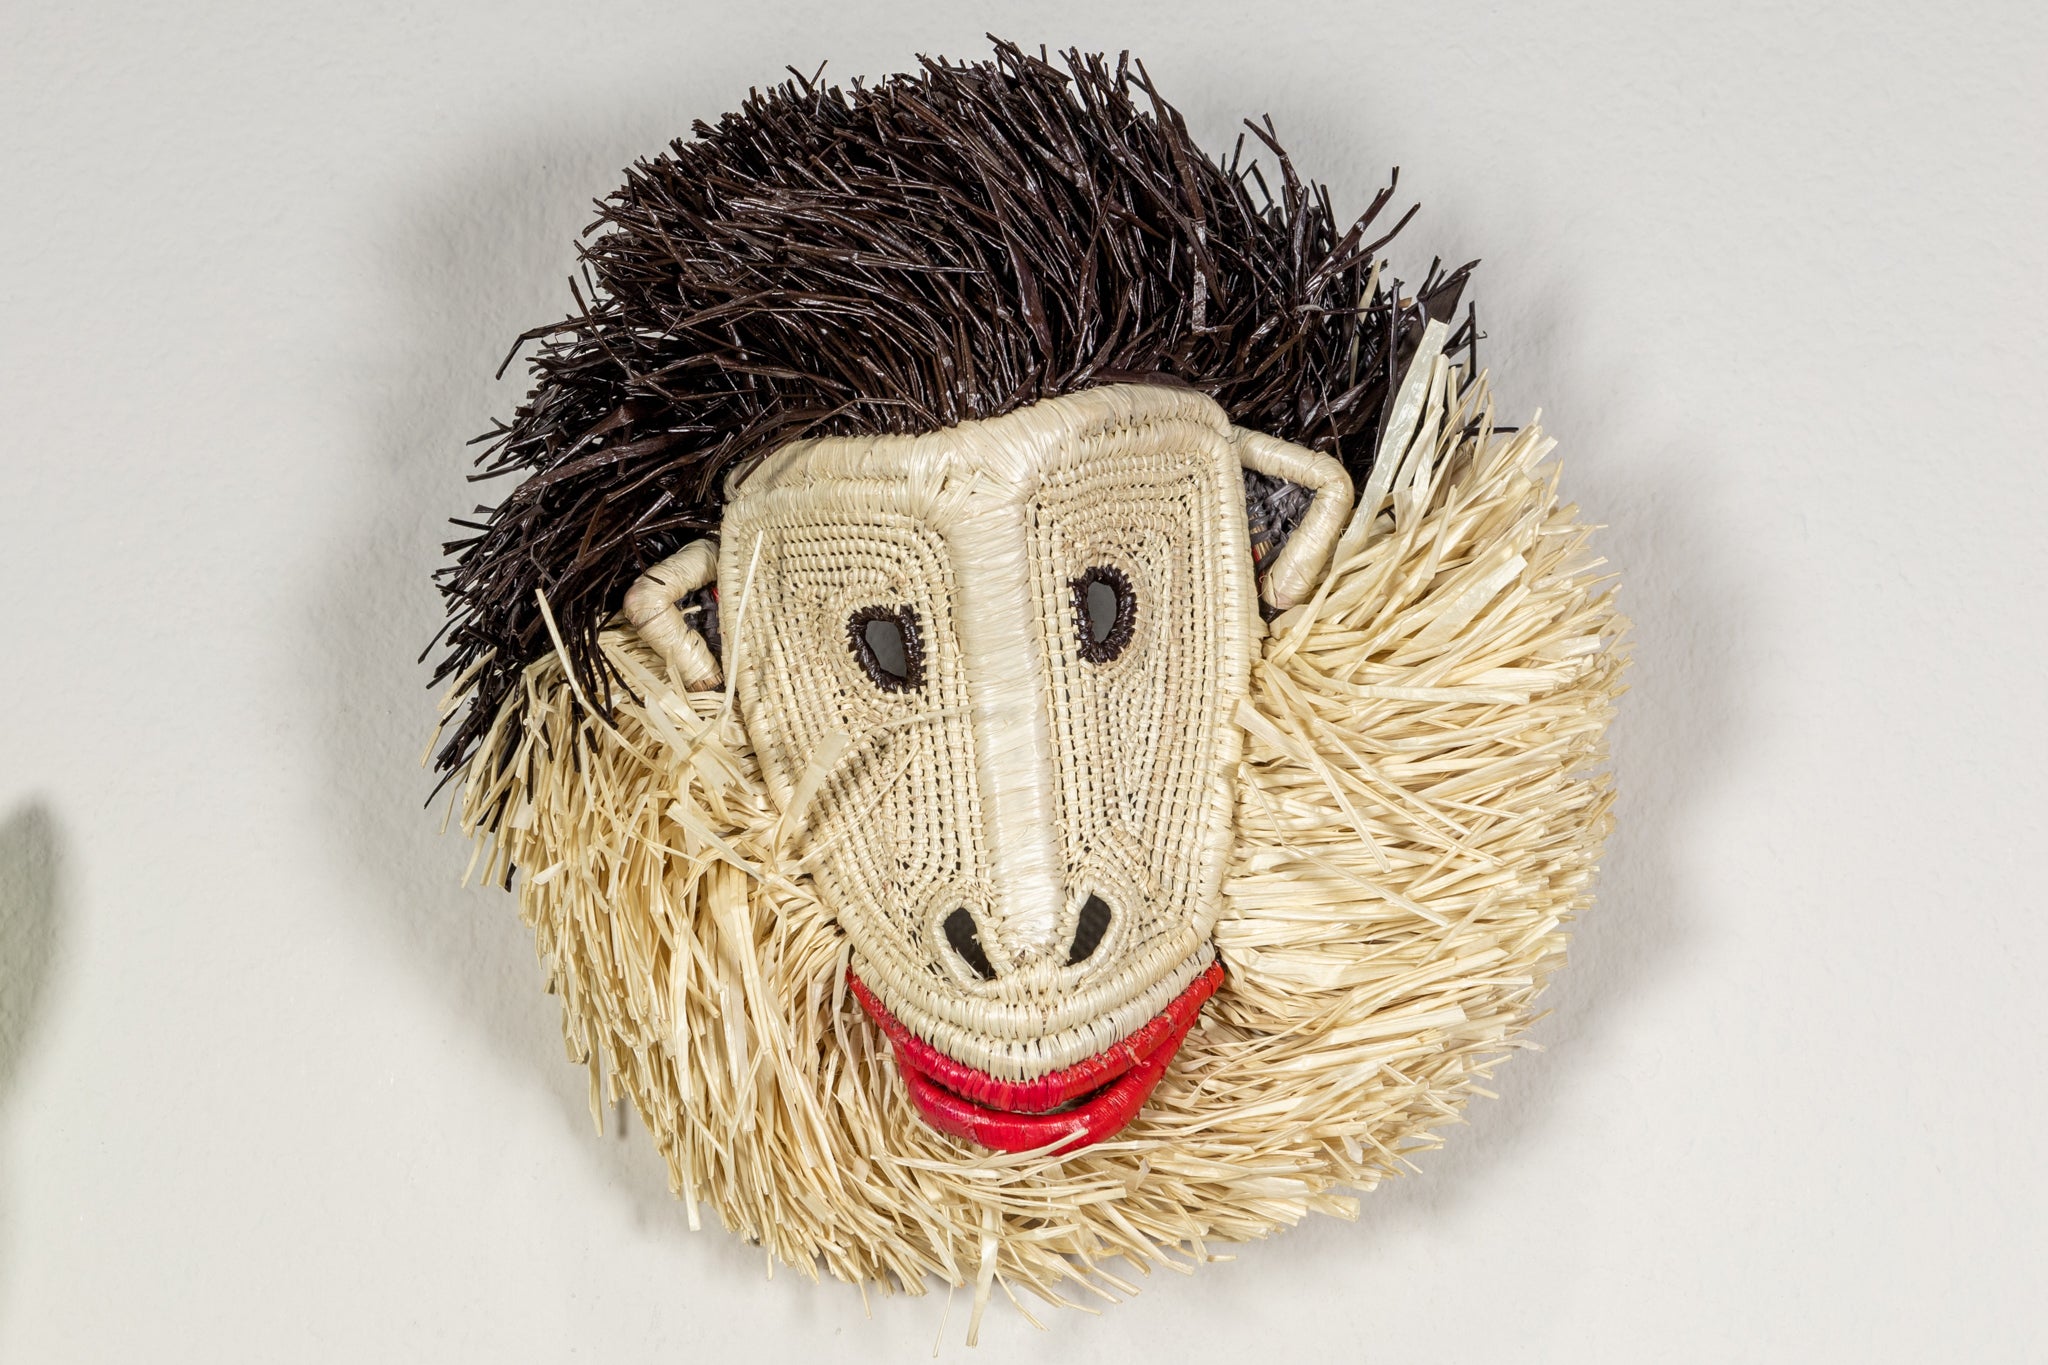 Roloway Monkey Mask